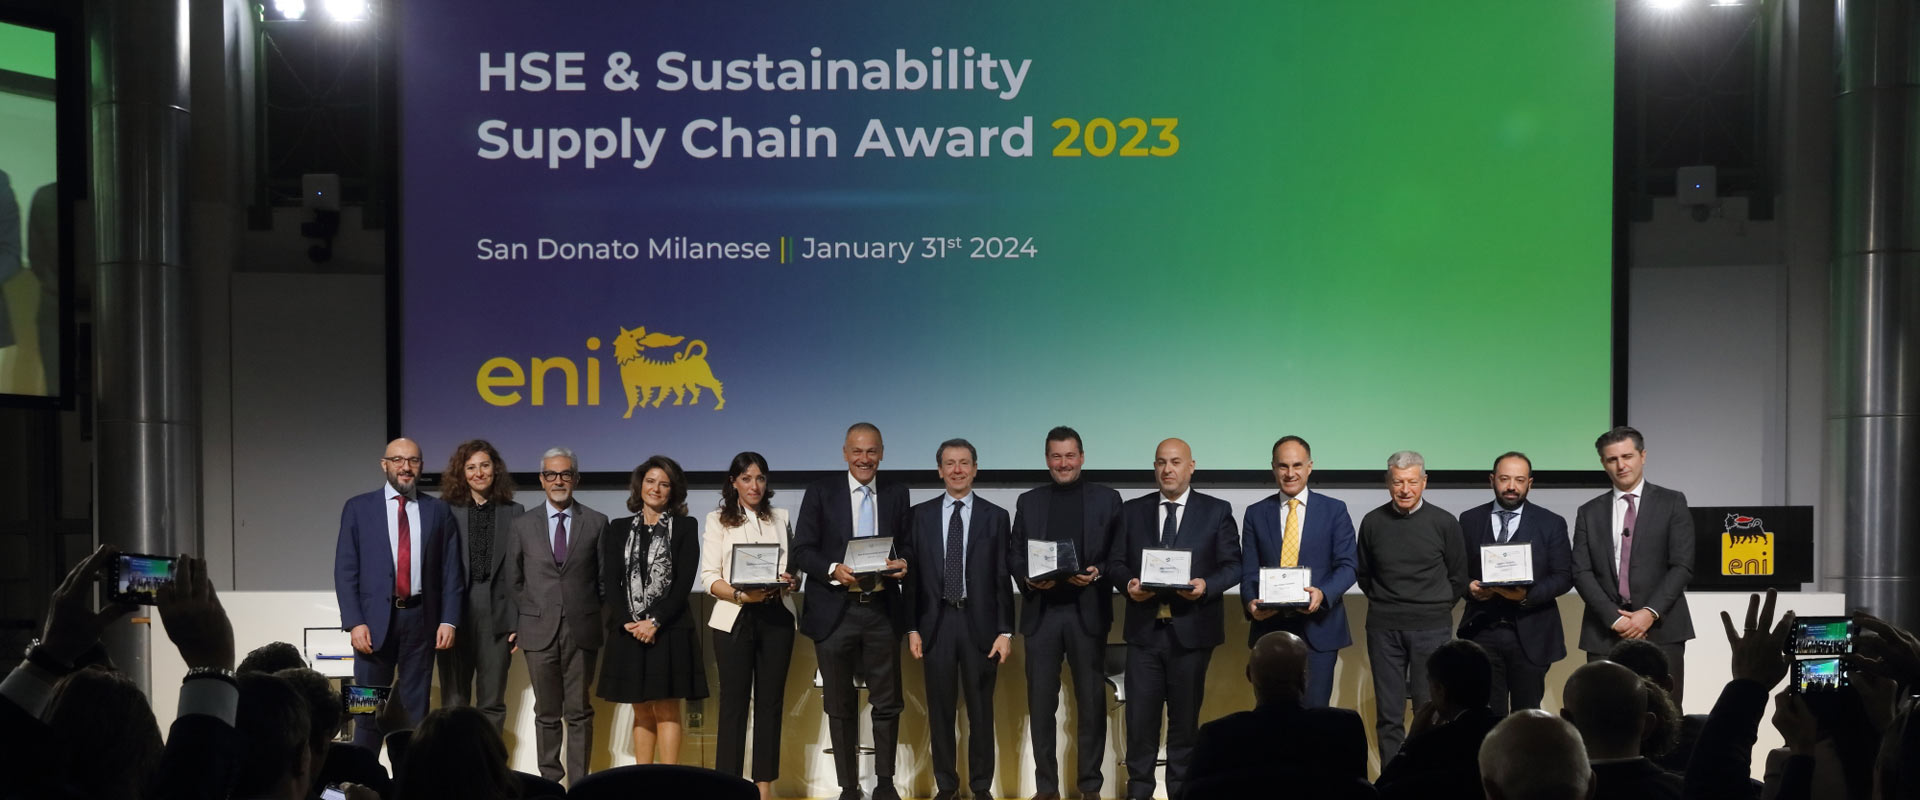 RICCOBONI SPA HA RICEVUTO IL PREMIO “Eni HSE & Sustainability Supply Chain Award 2023”